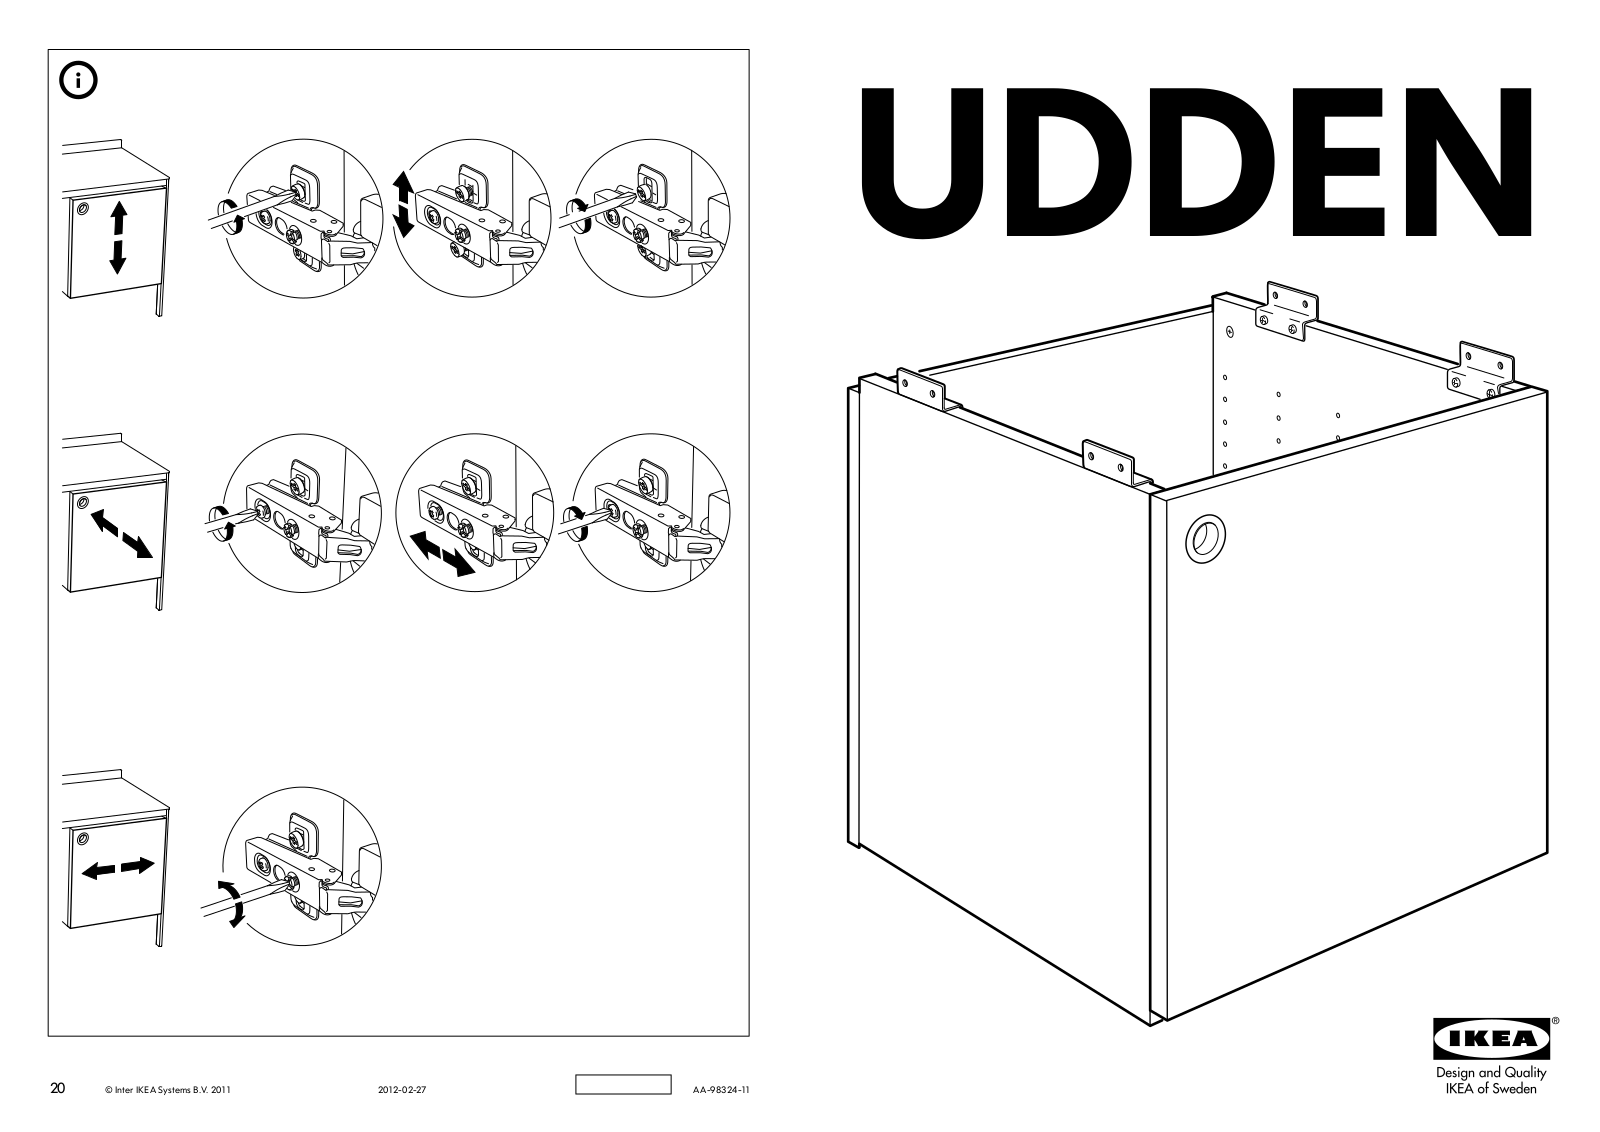 IKEA UDDEN User Manual